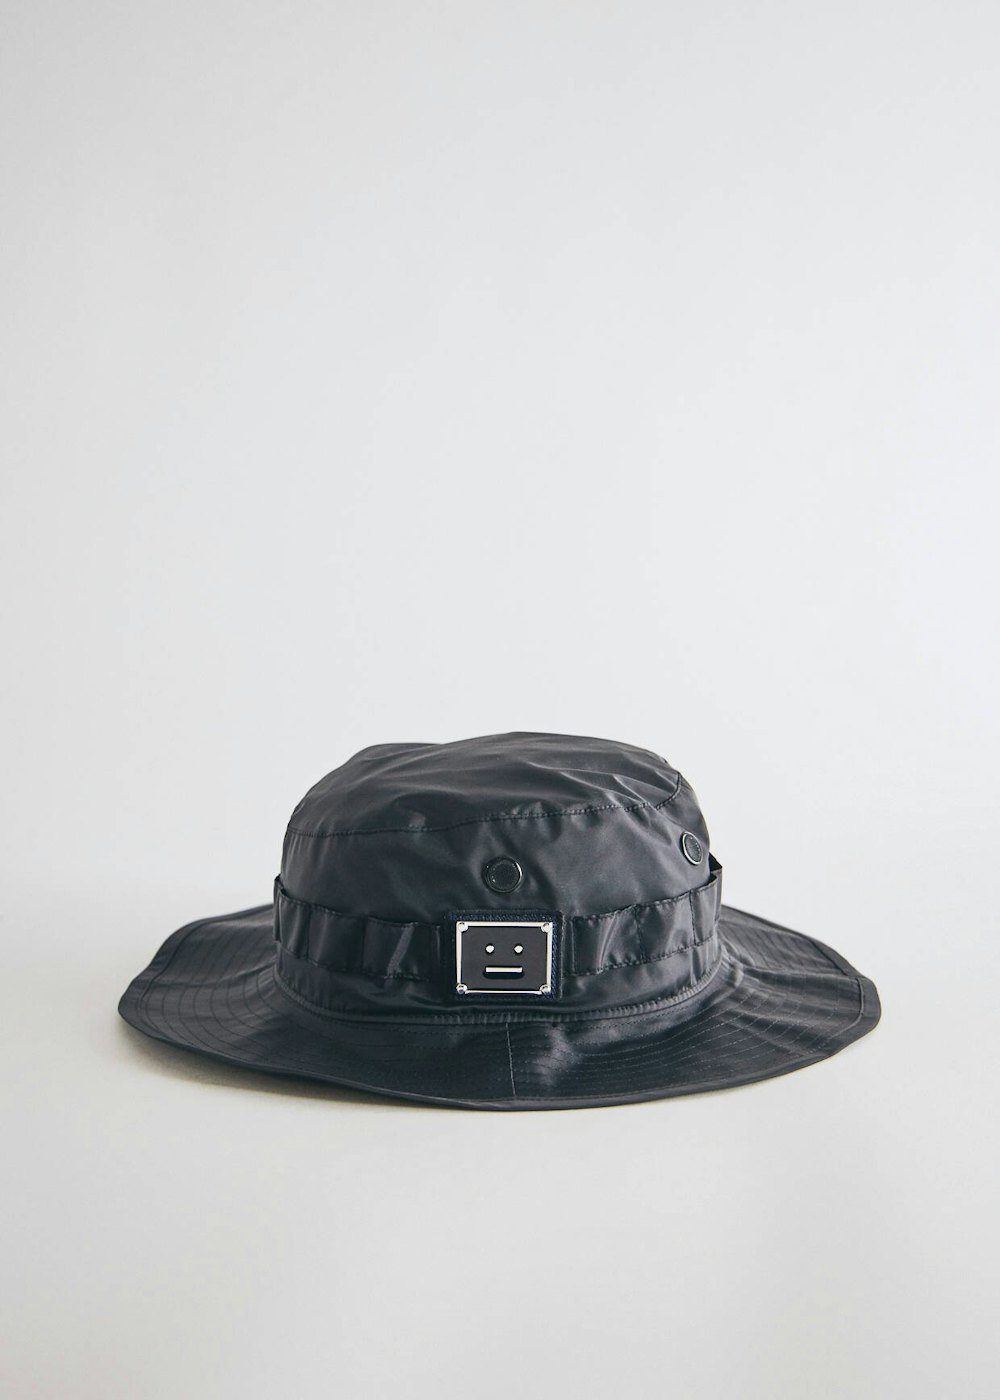 Brimm Plaque Face Hat in Black